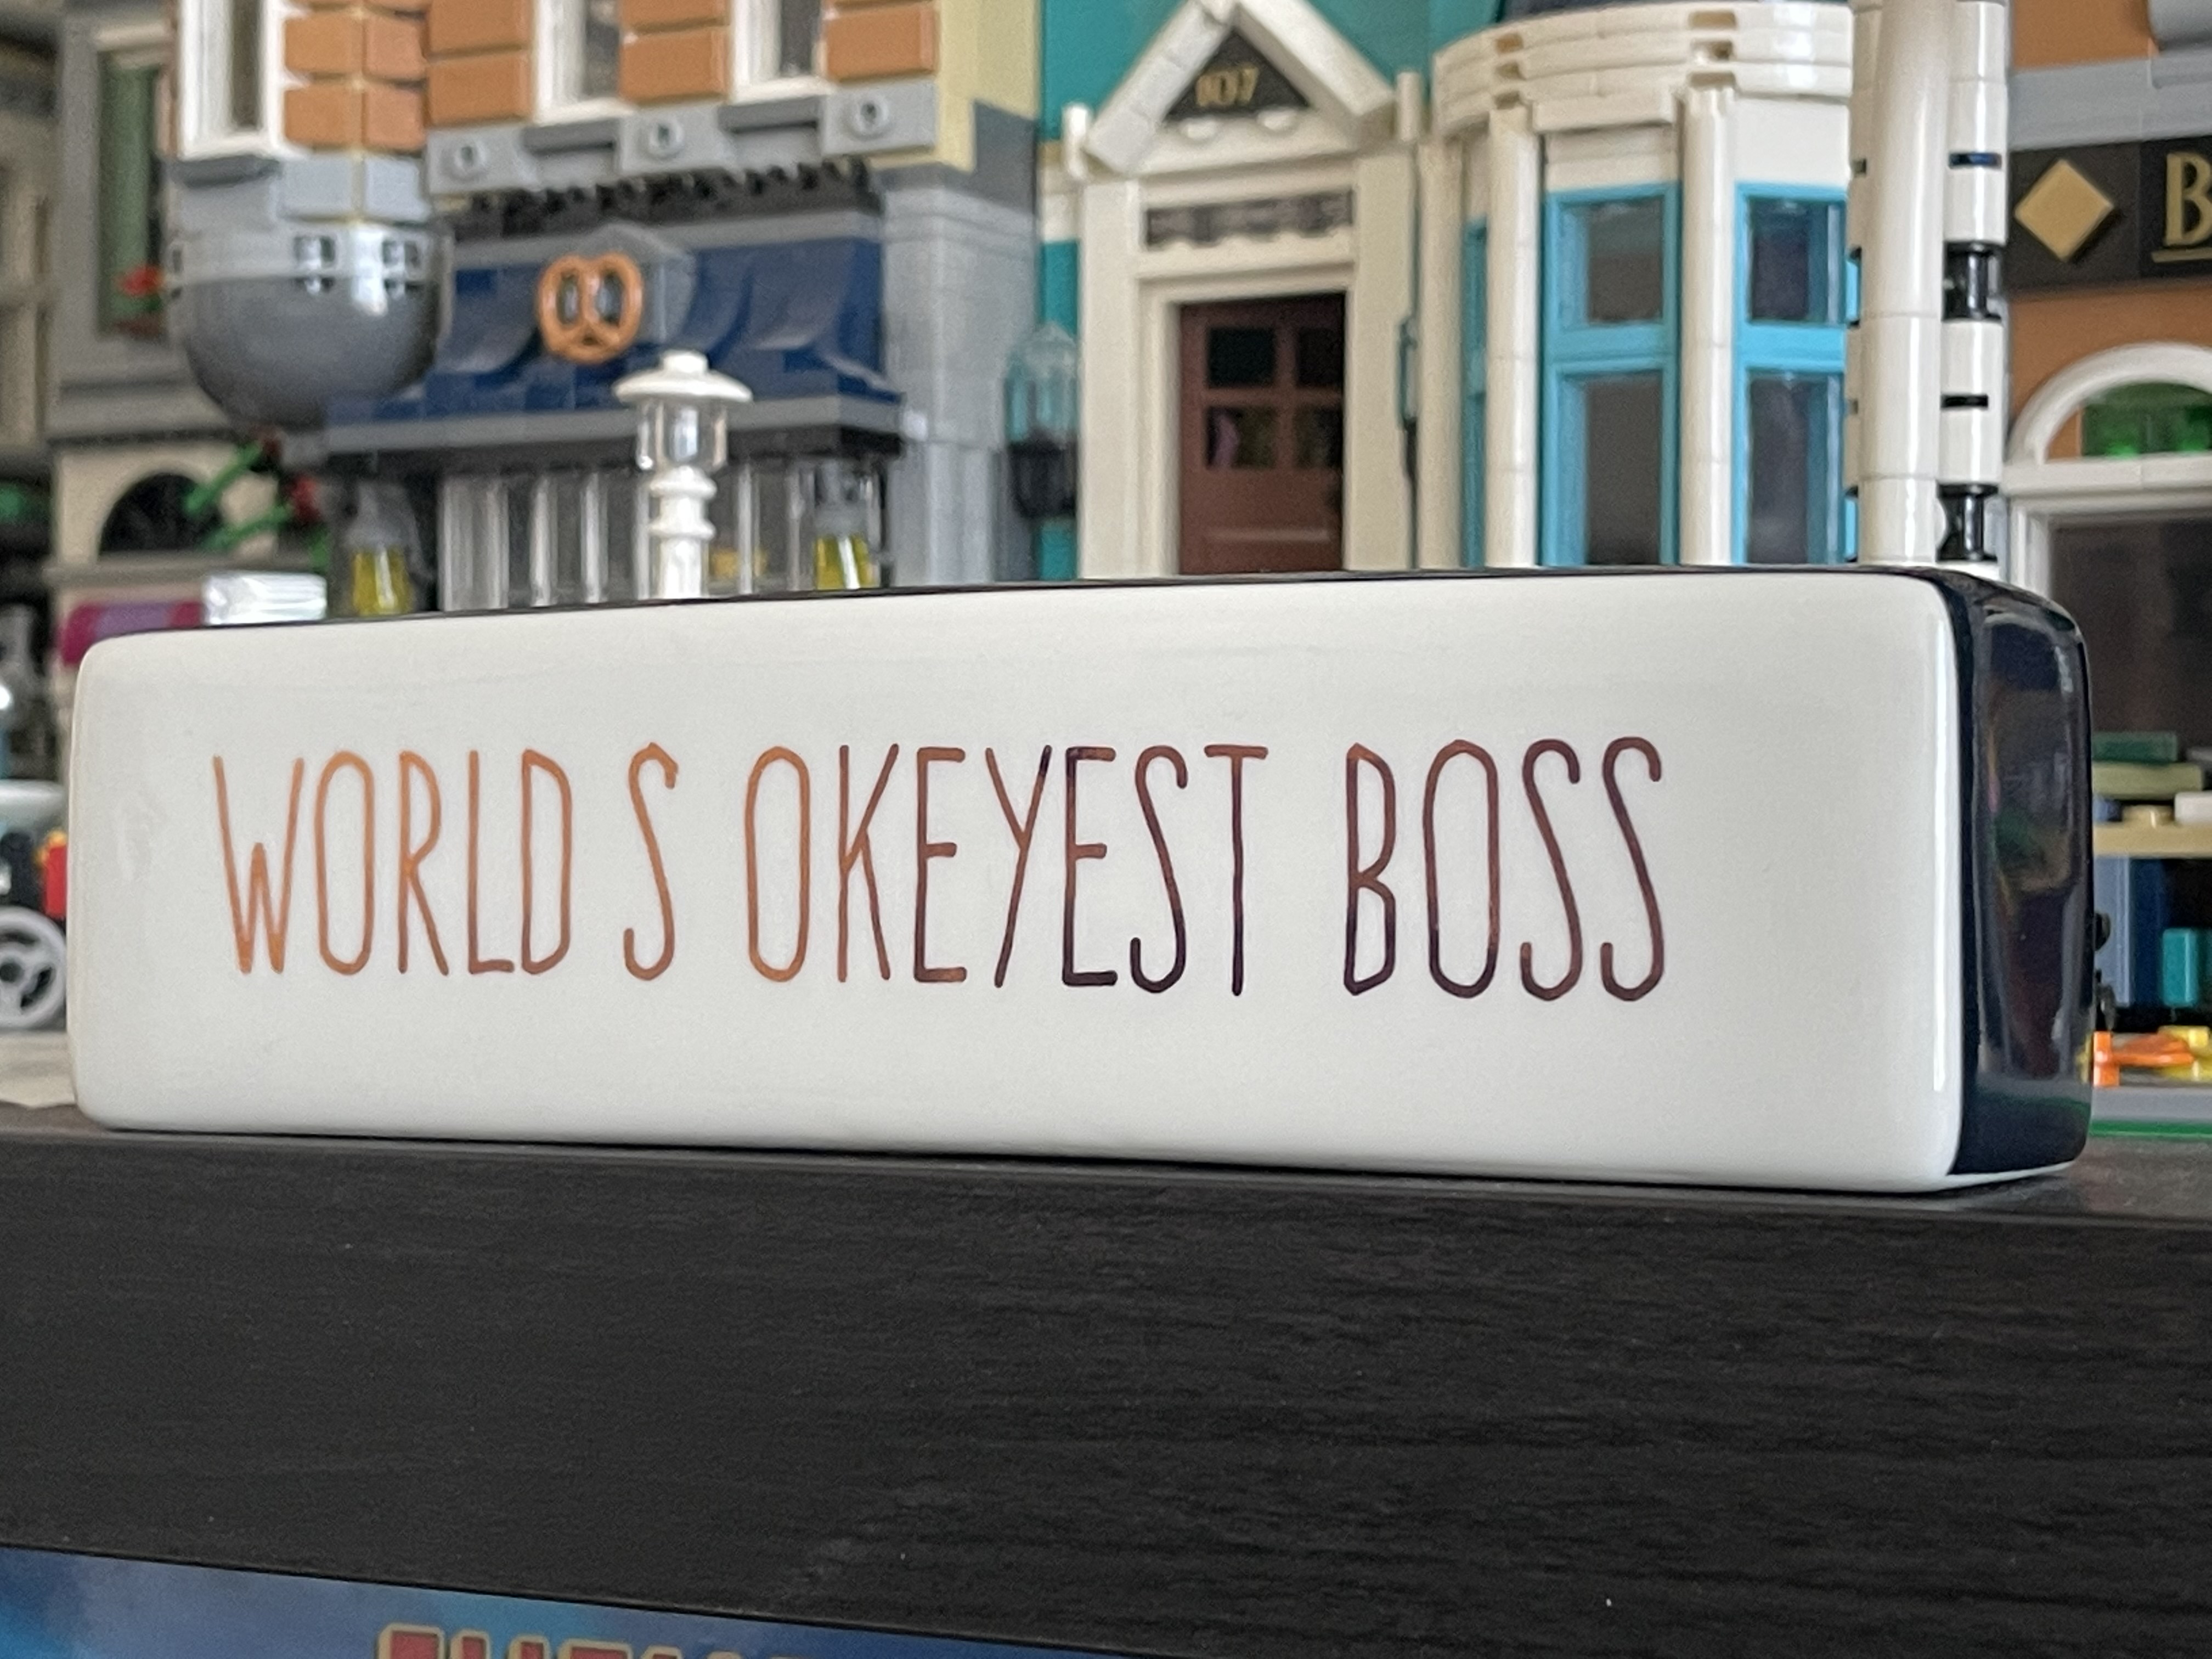 "Worl's okeyest Boss" paper weight